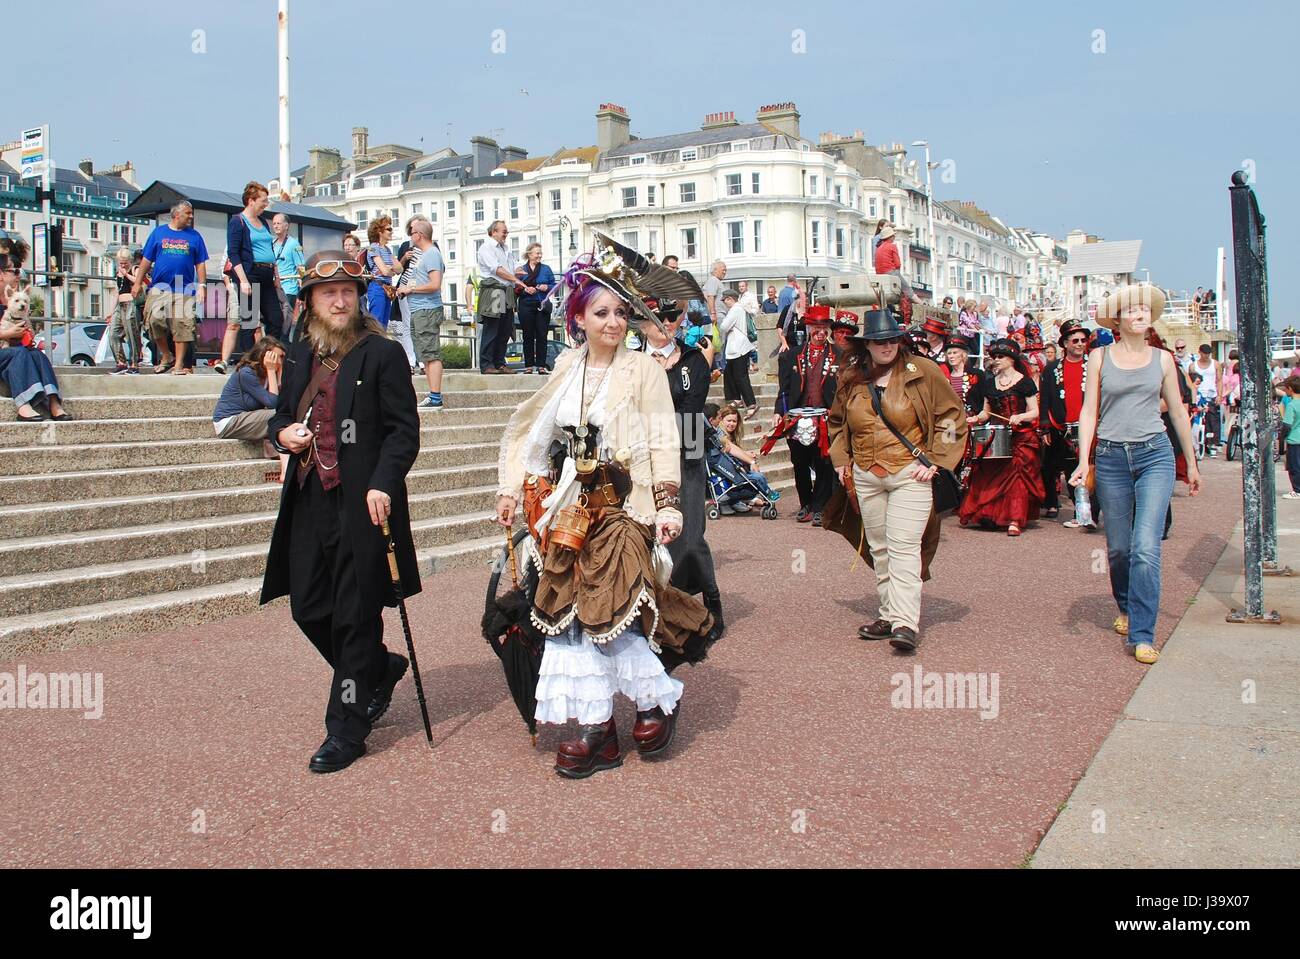 Abschnitt 5 Trommler parade entlang der Strandpromenade während des jährlichen Festivals der St.Leonards bei St.Leonards-on-Sea, England am 12. Juli 2014. Stockfoto